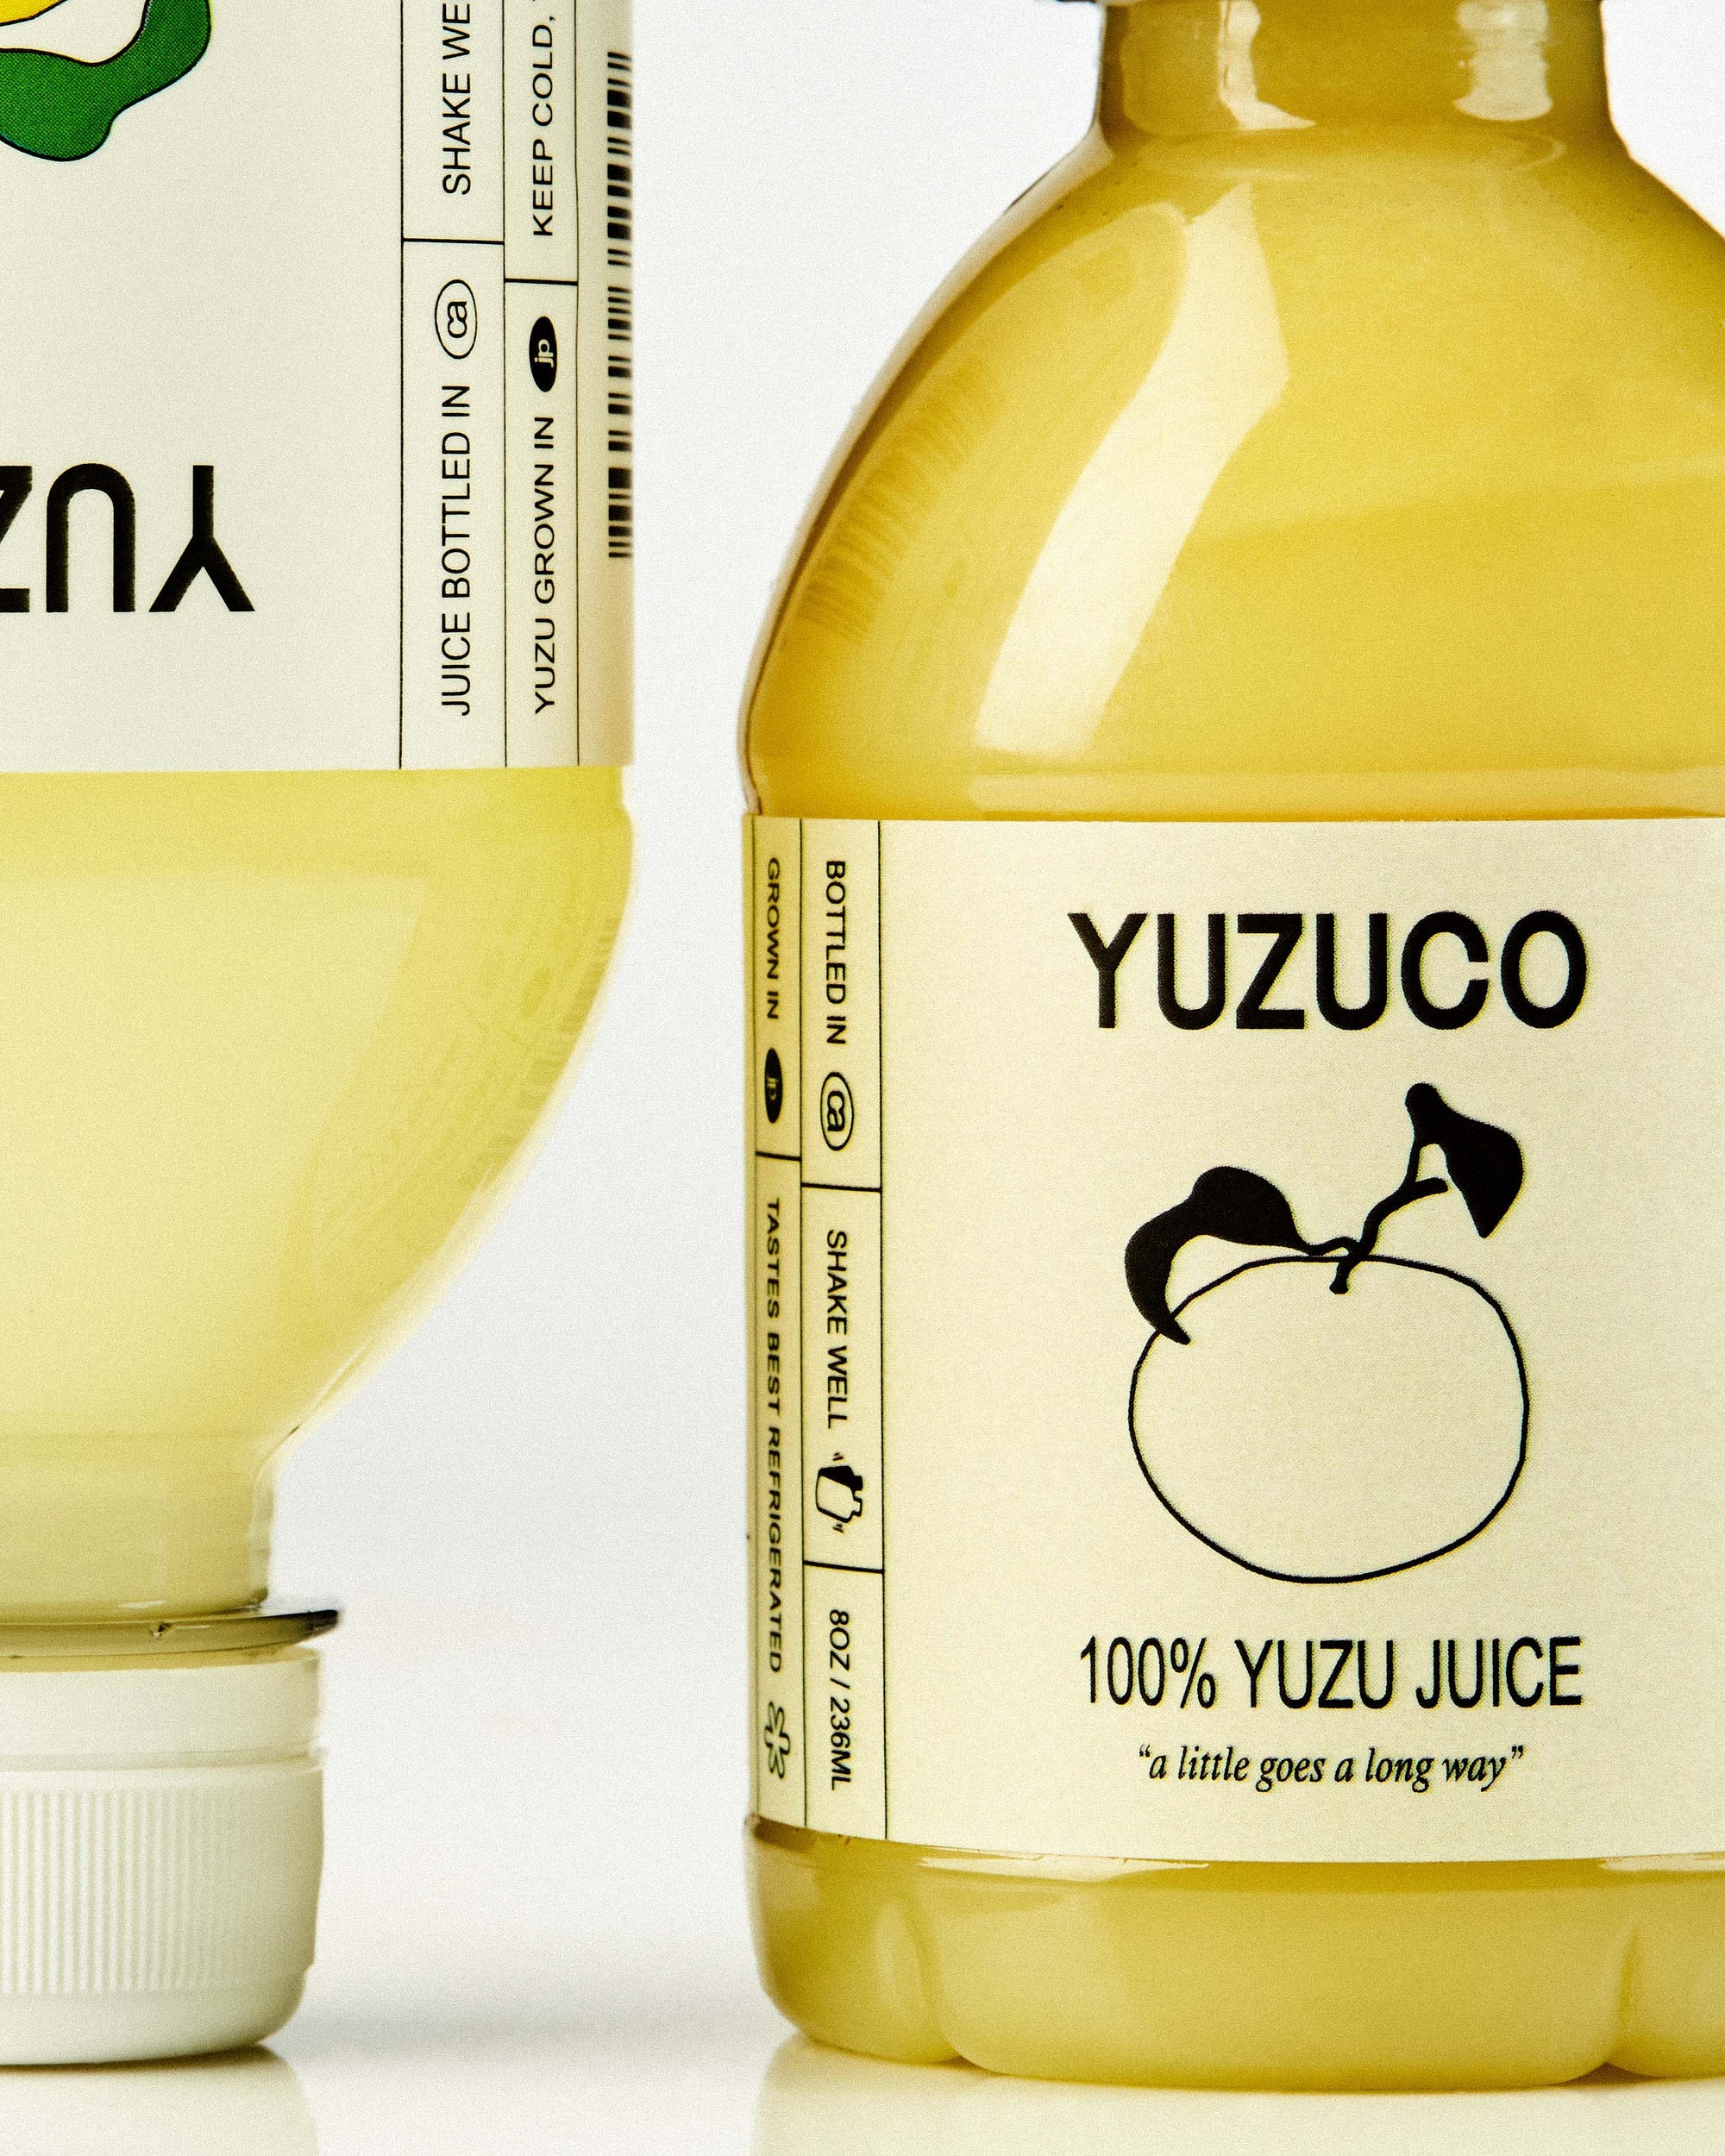 yuzuco juice bottles